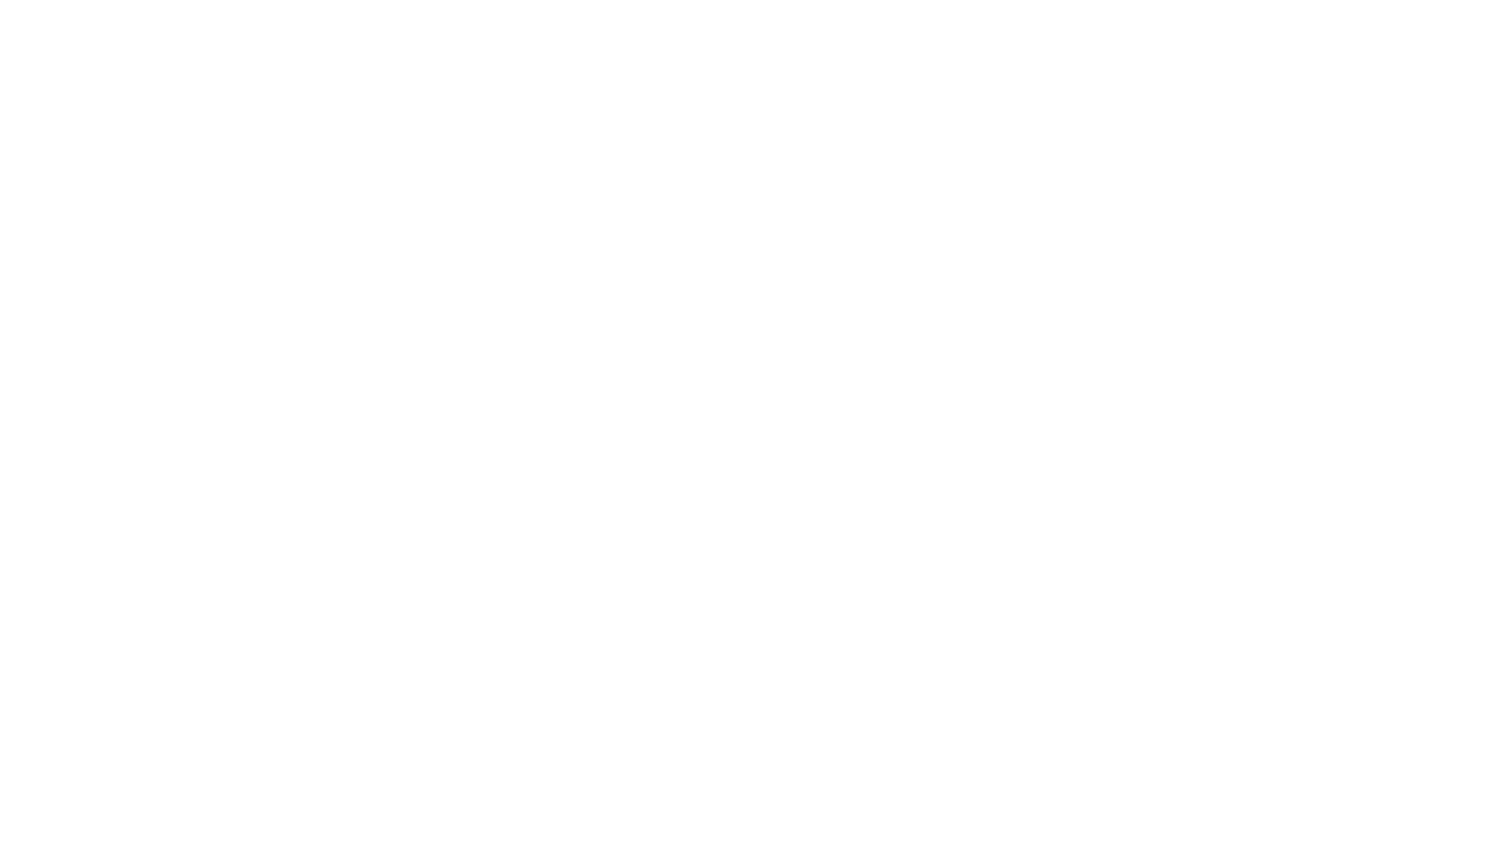 Joe Sherwood